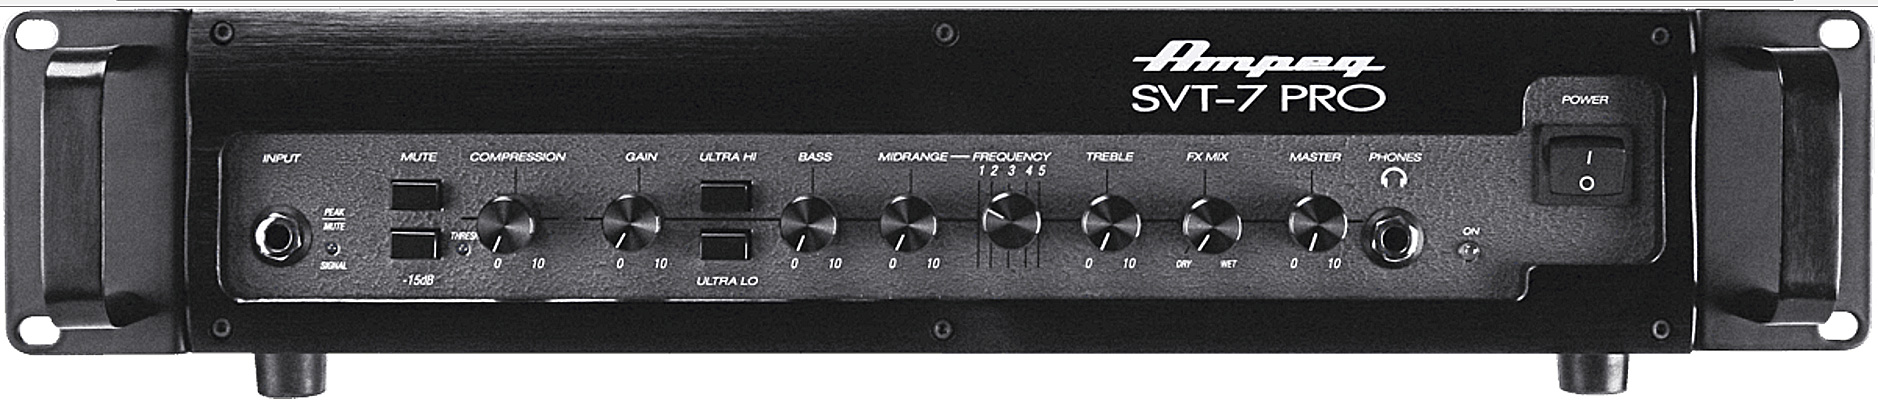 Ampeg Svt7-pro Head 1000w 4 Ohms Black - Pro Series - Bass amp head - Variation 1